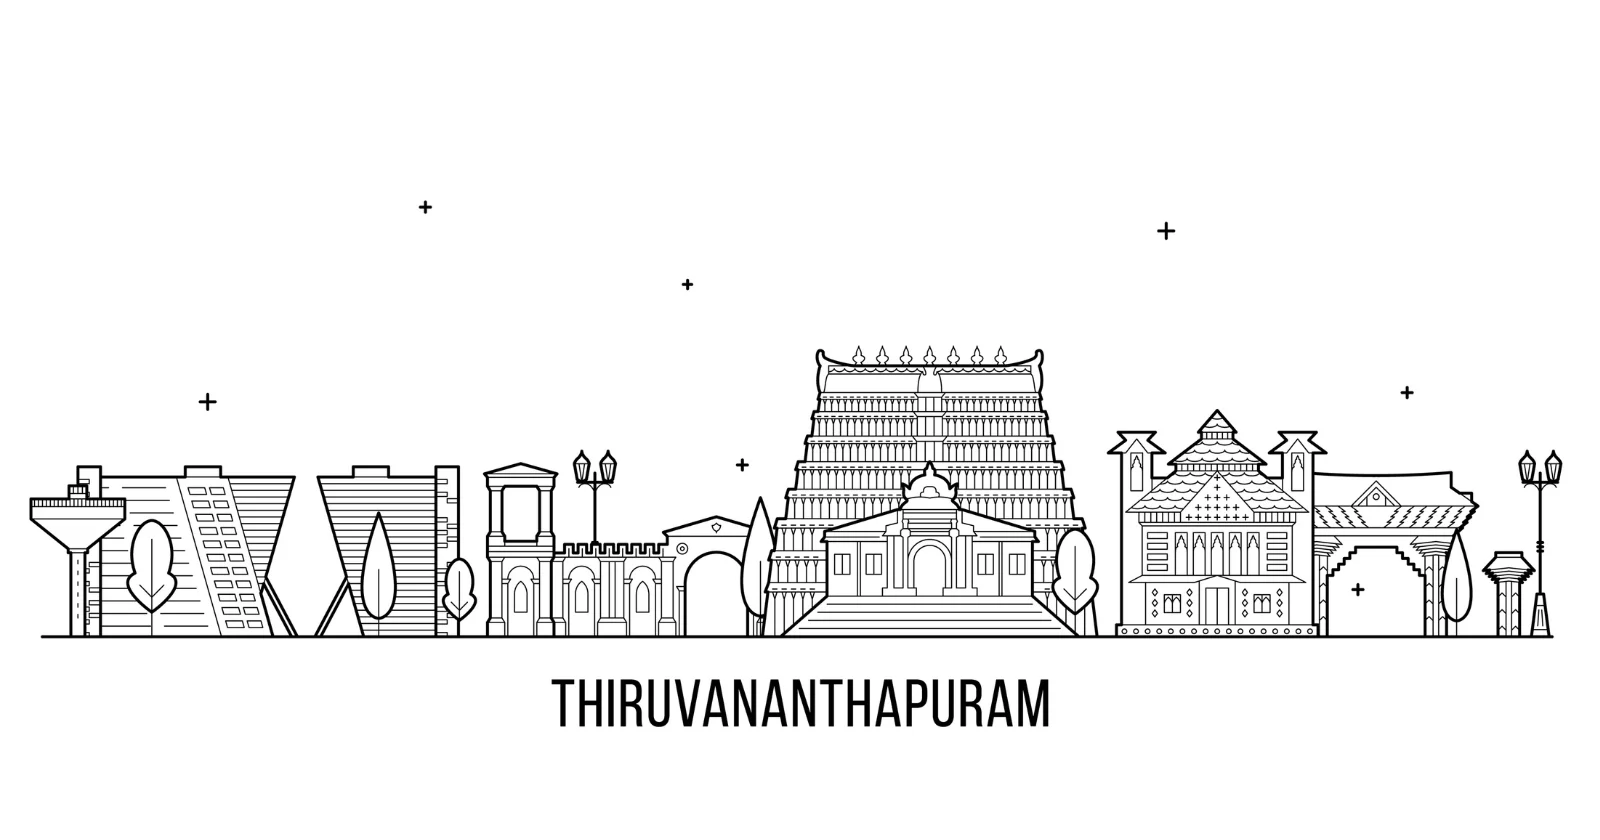 Thiruvananthapuram RTO Office: RTO Office, Website and Contact Details